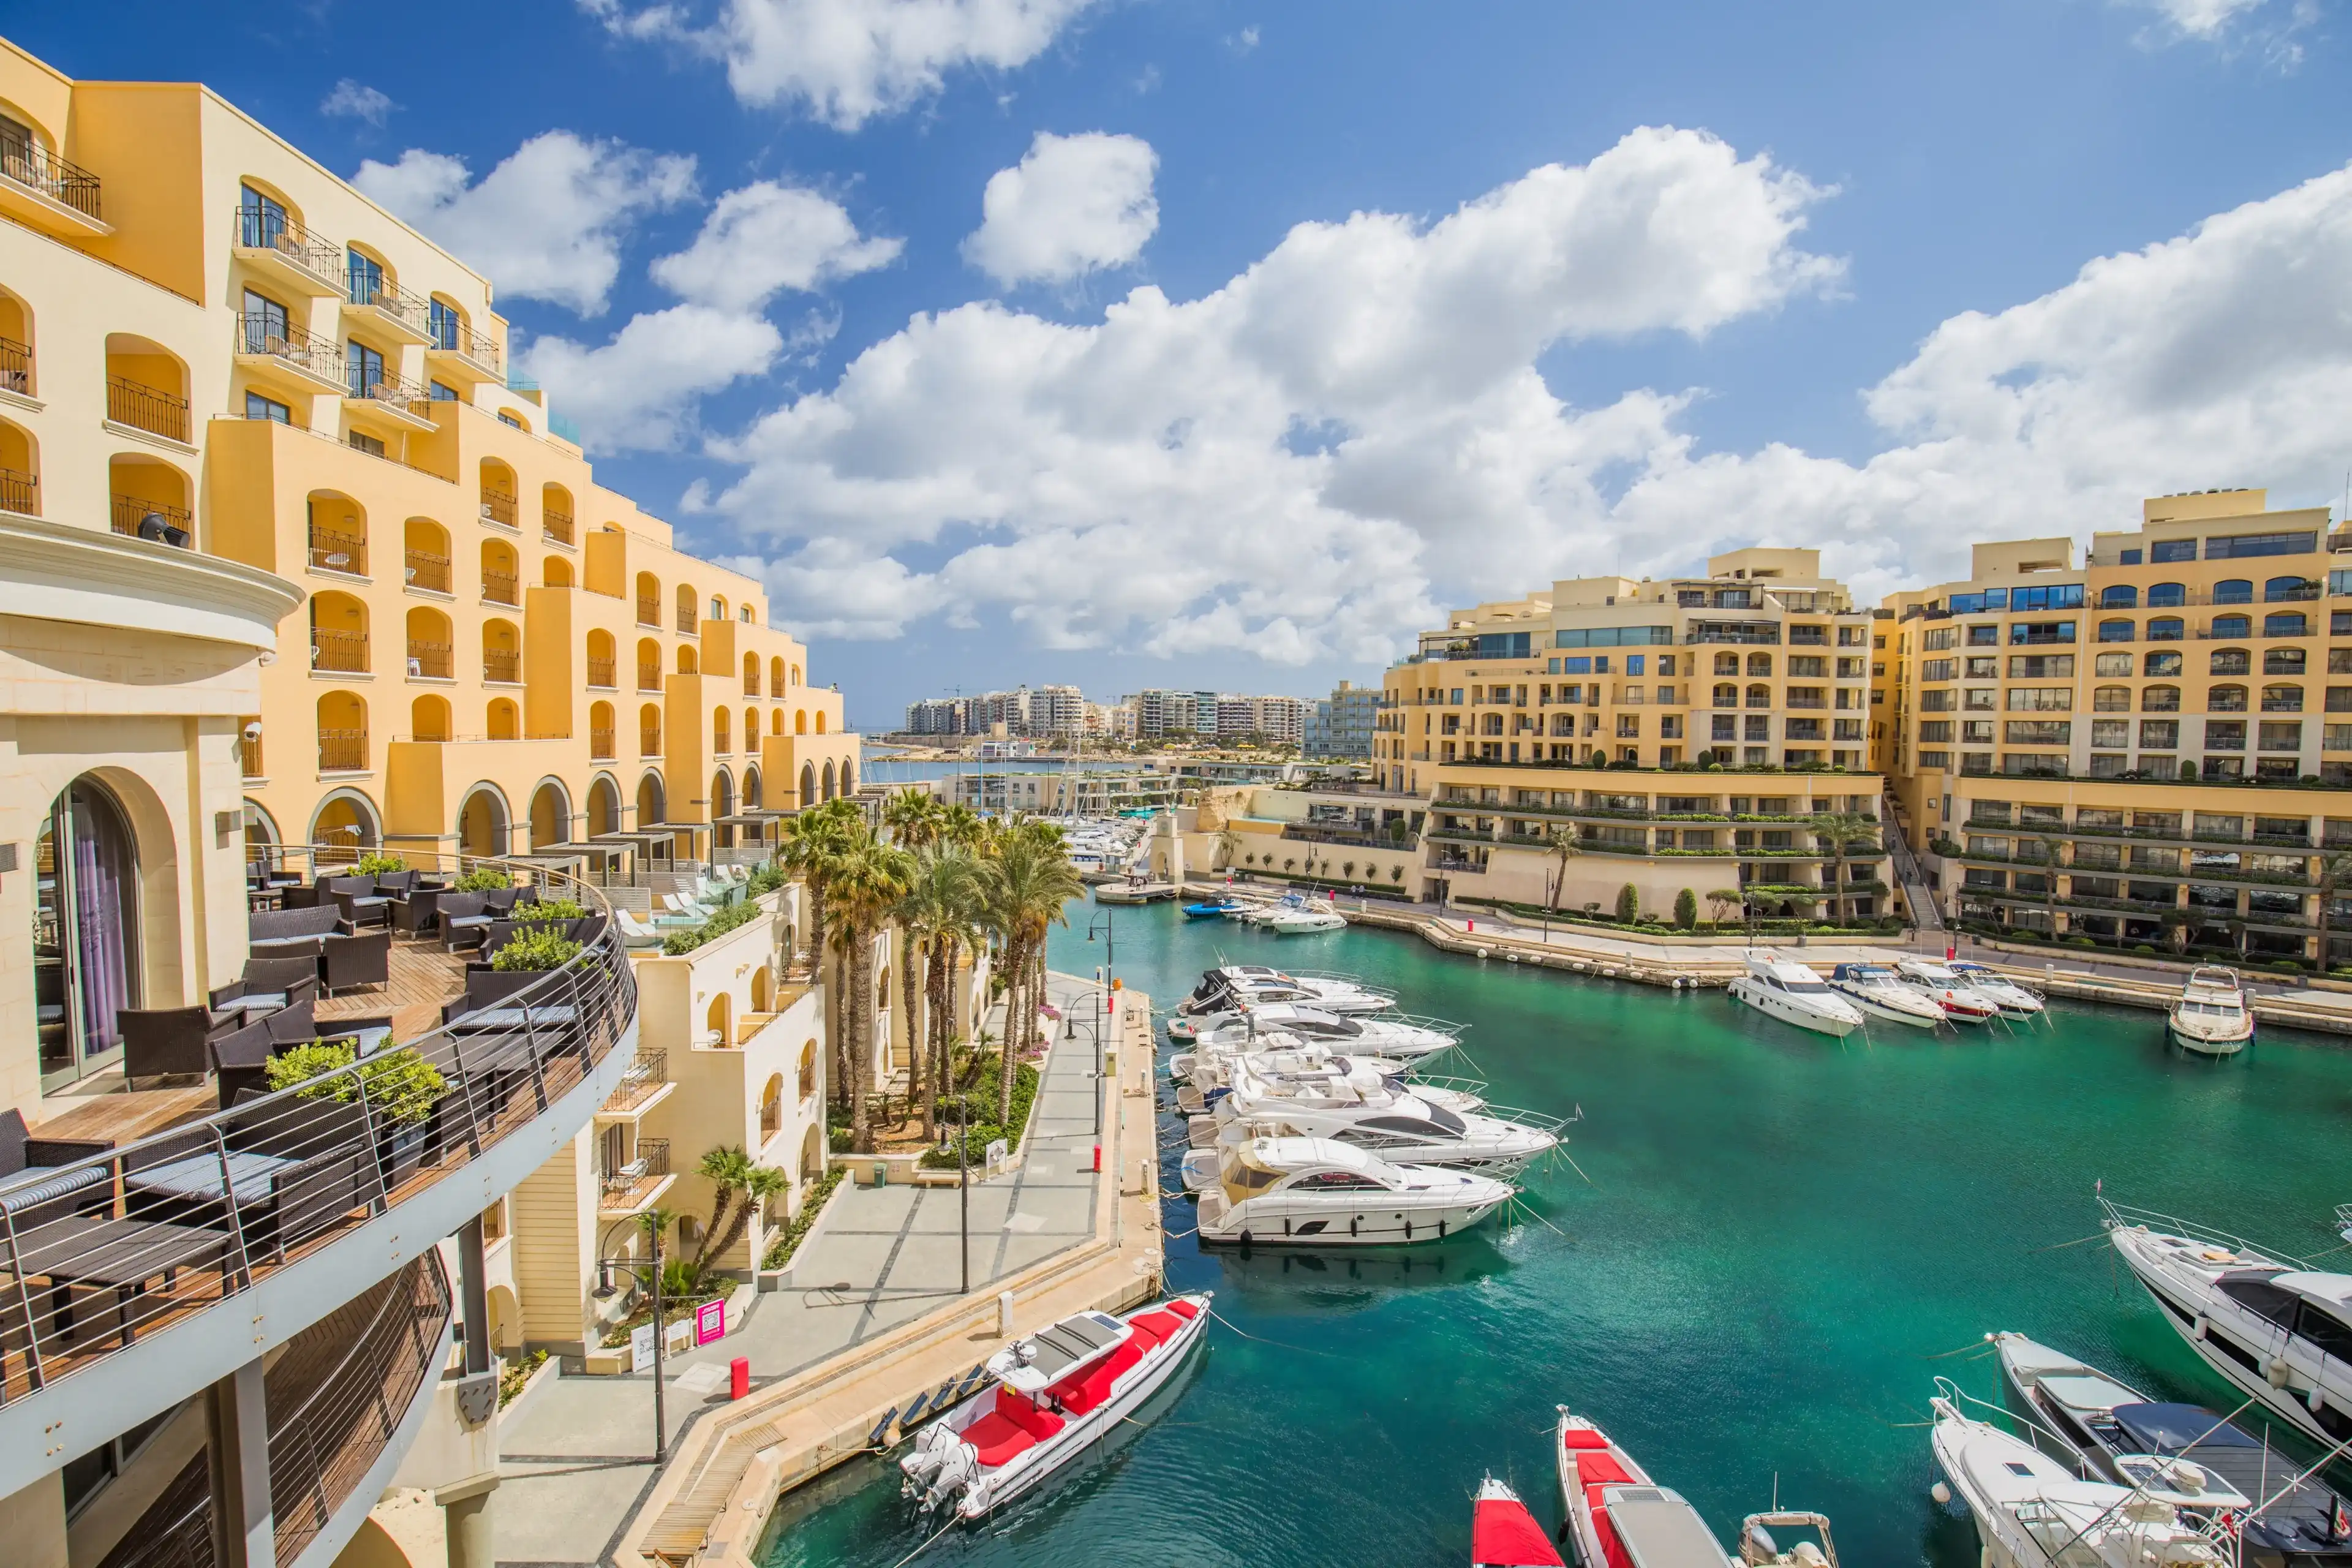 Best San Ġiljan hotels. Cheap hotels in San Ġiljan, Malta